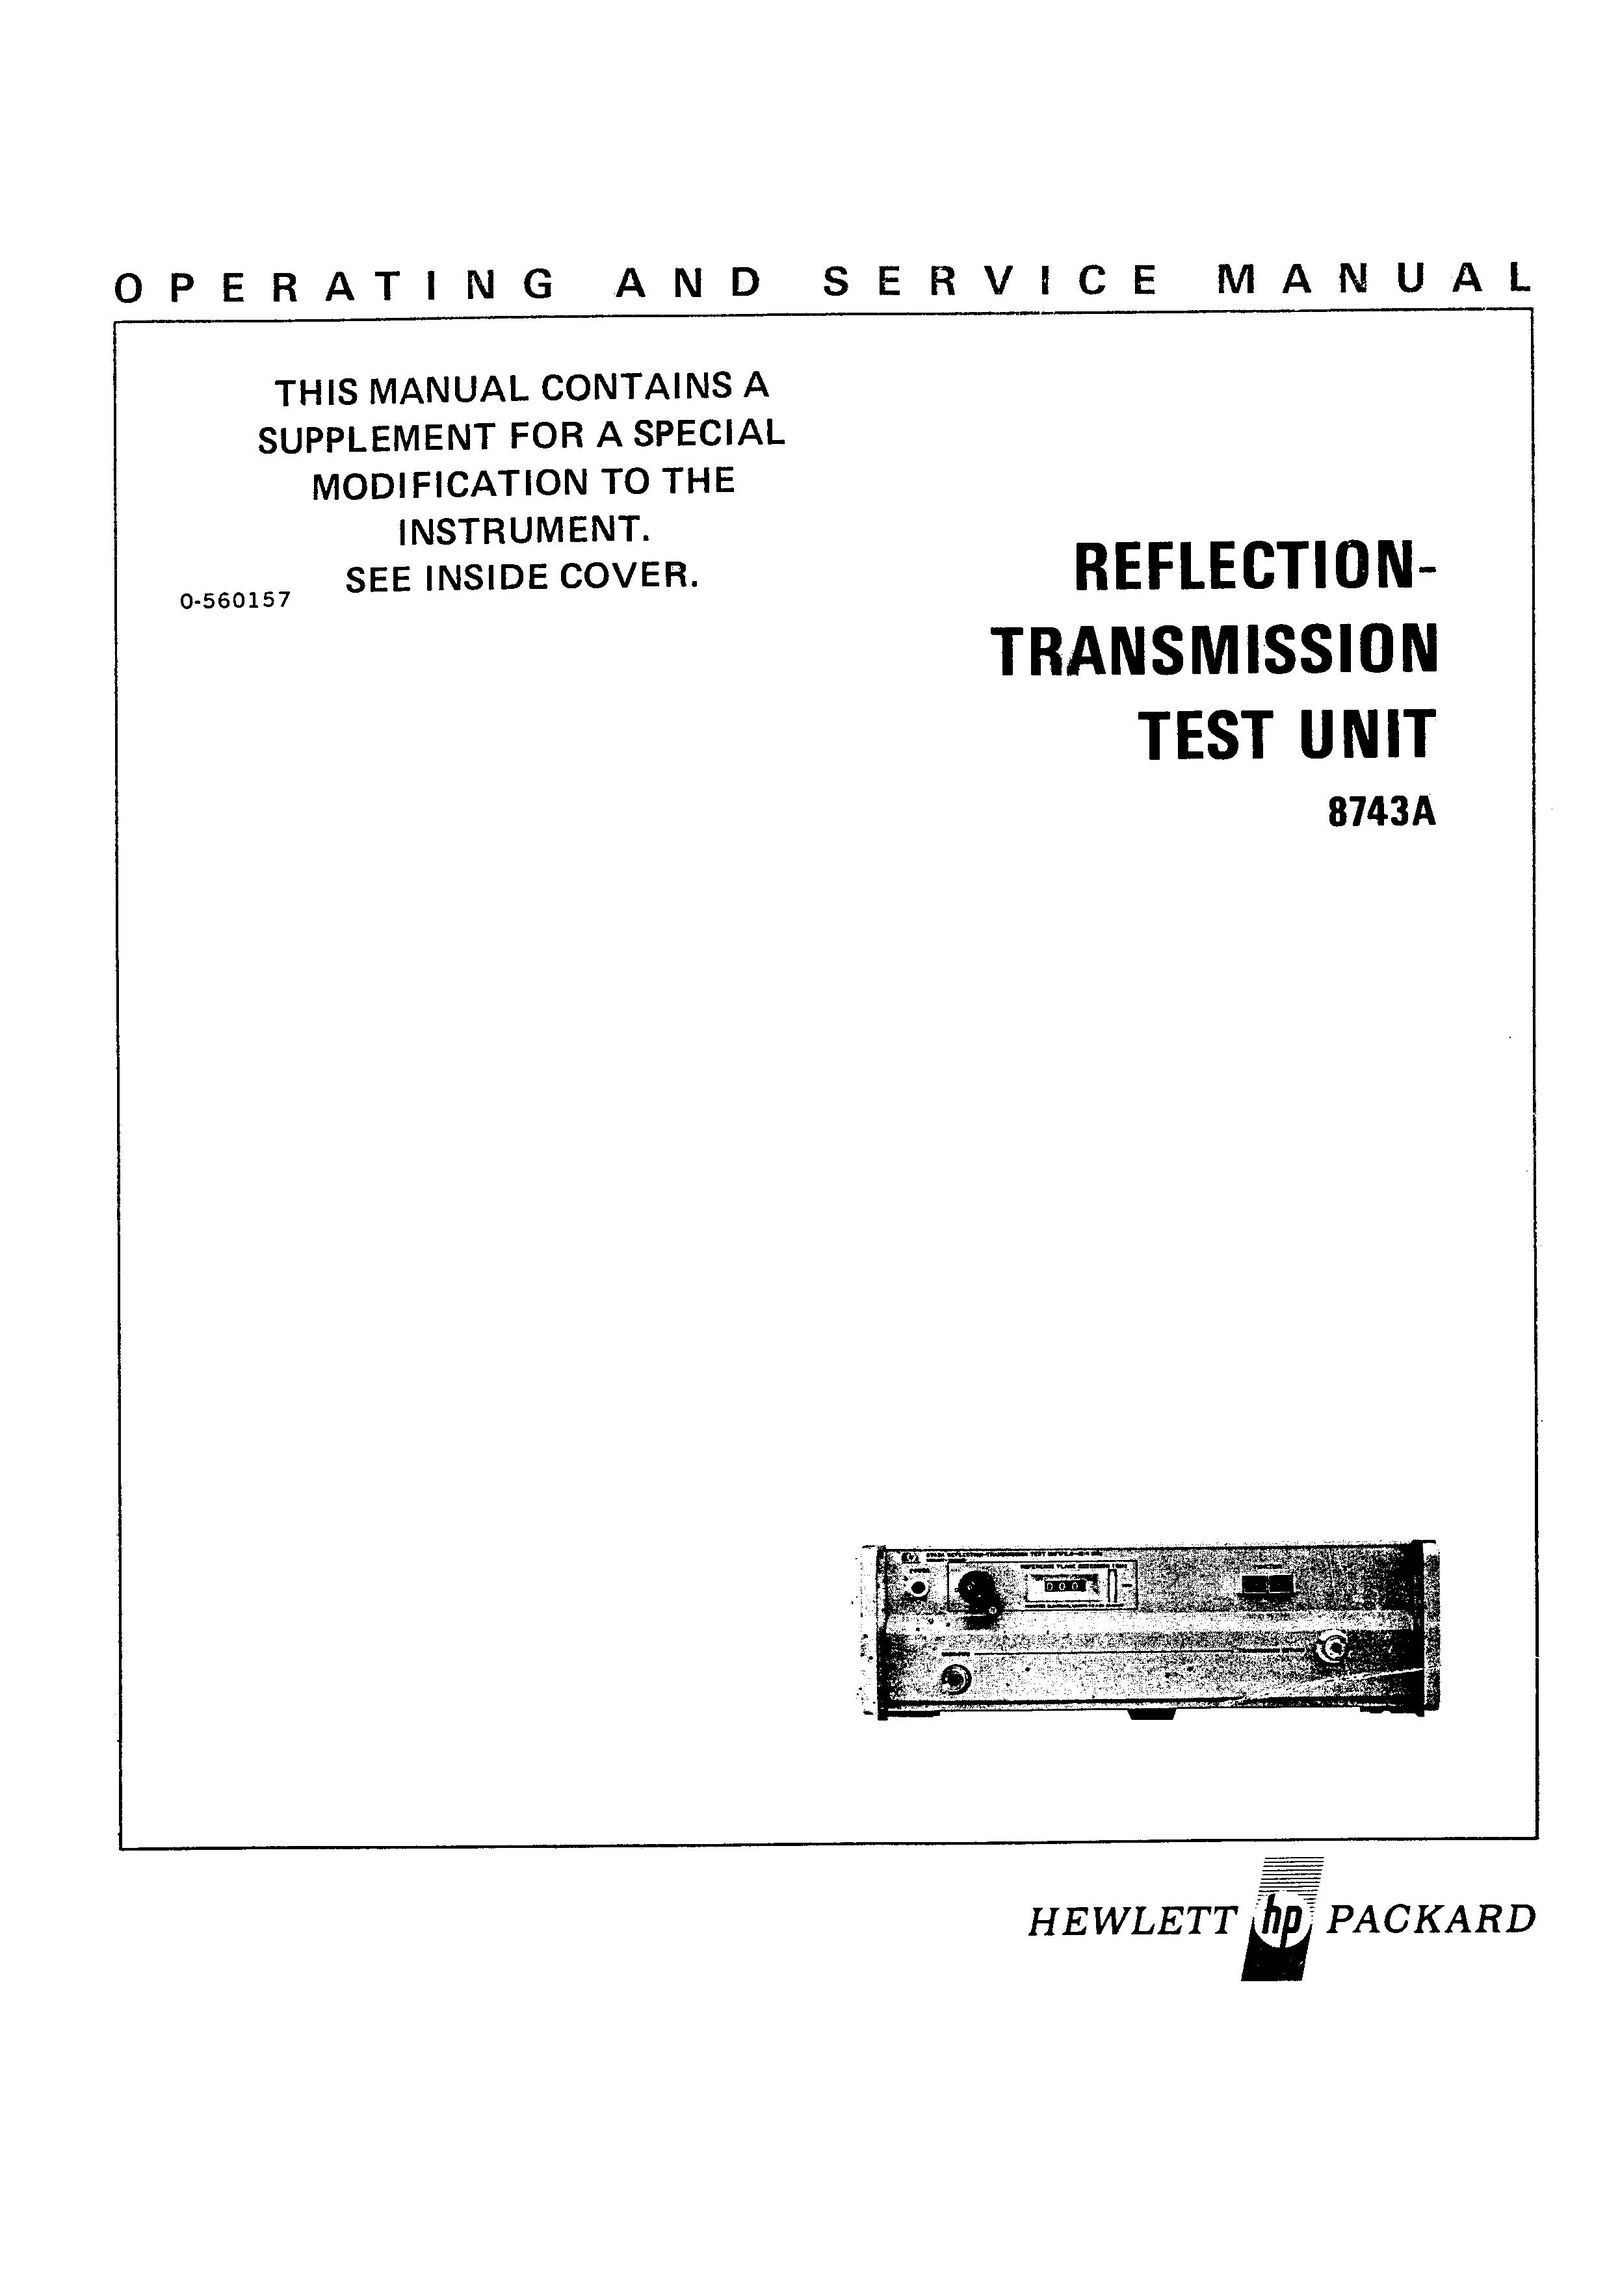 HP (Hewlett-Packard) 8743A Satellite Radio User Manual